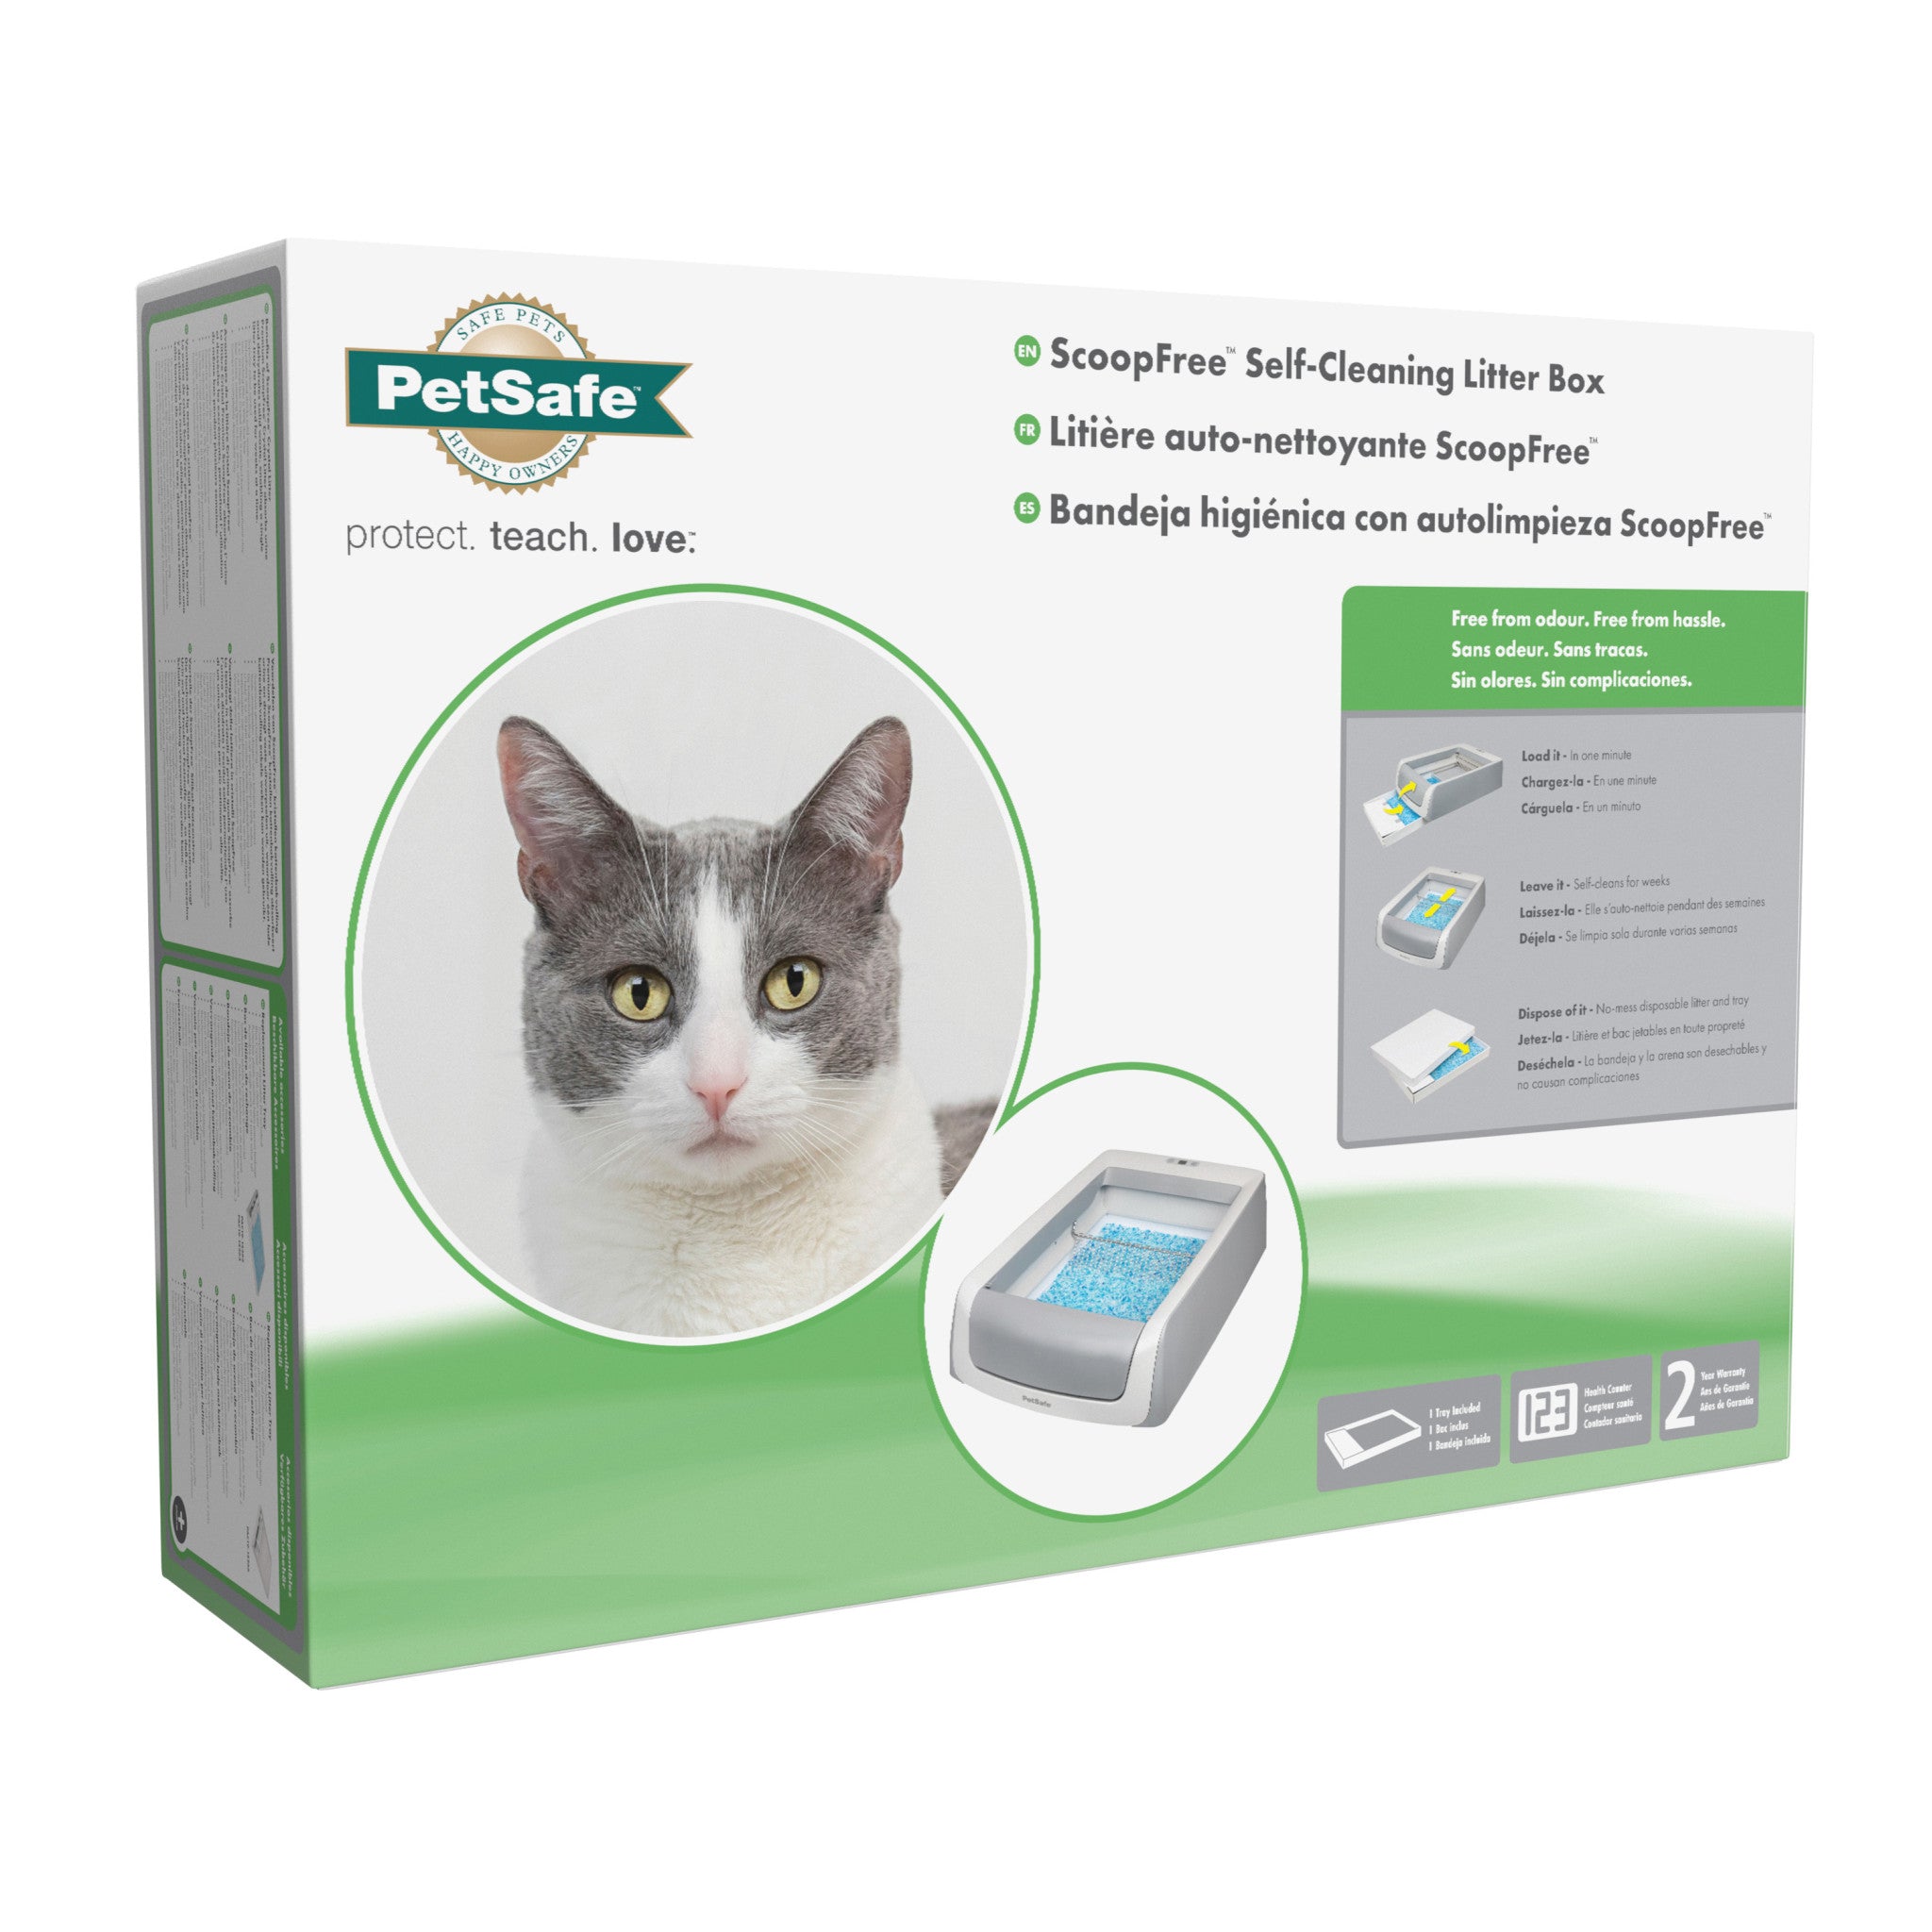 PetSafe - Arenero Automático para gatos ScoopFree Original 